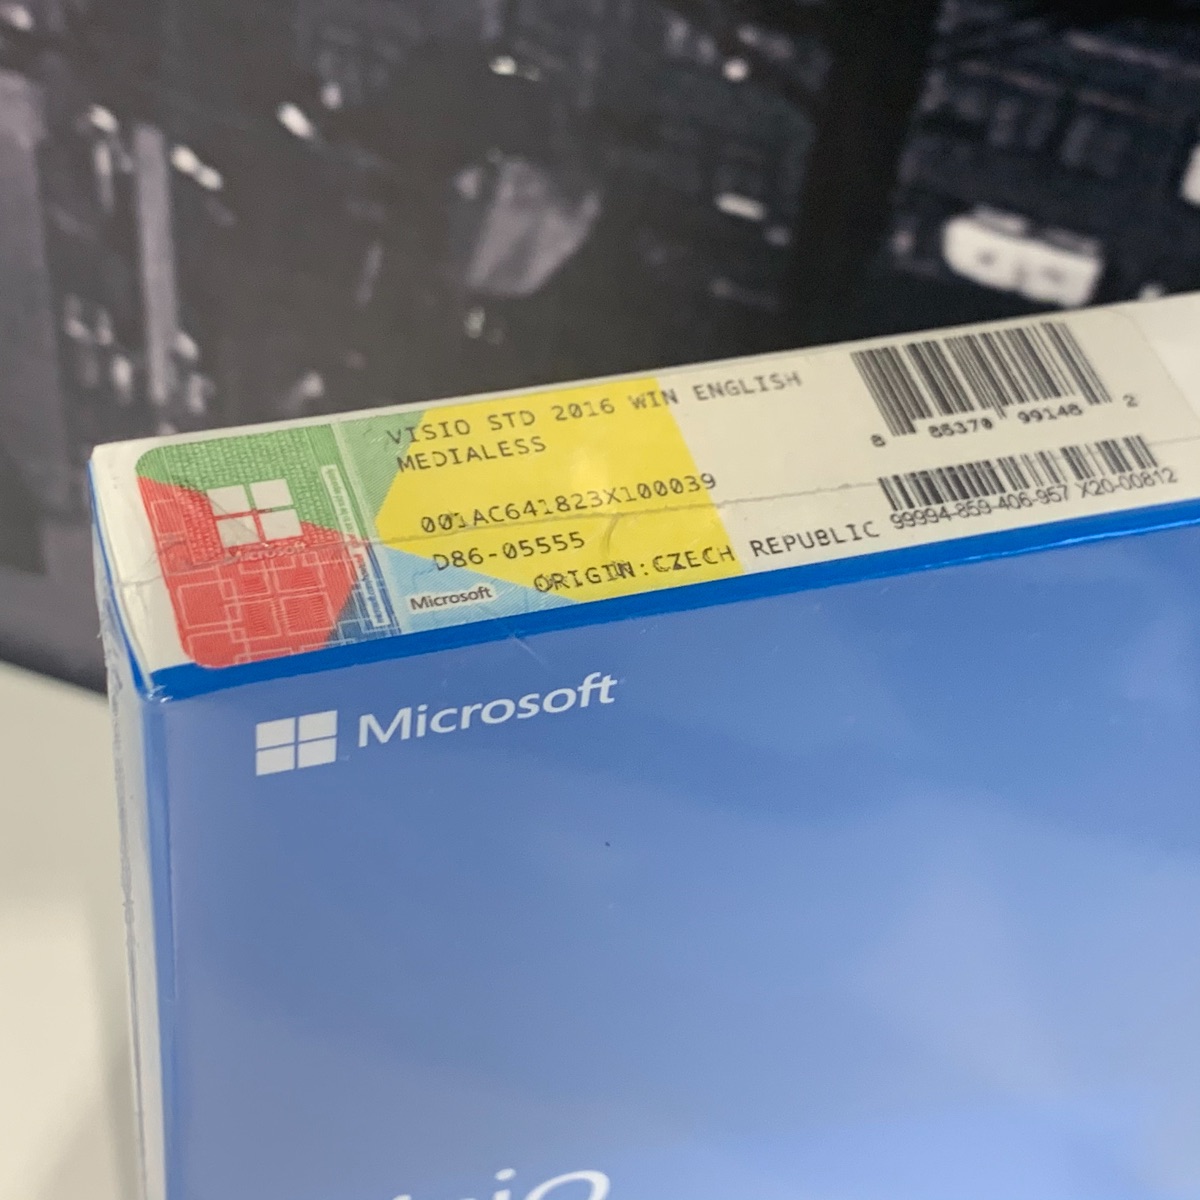 Microsoft Visio 2016 Standard Original UK 365 New and Sealed D86-05555 885370991482 (Brand New & Sealed)